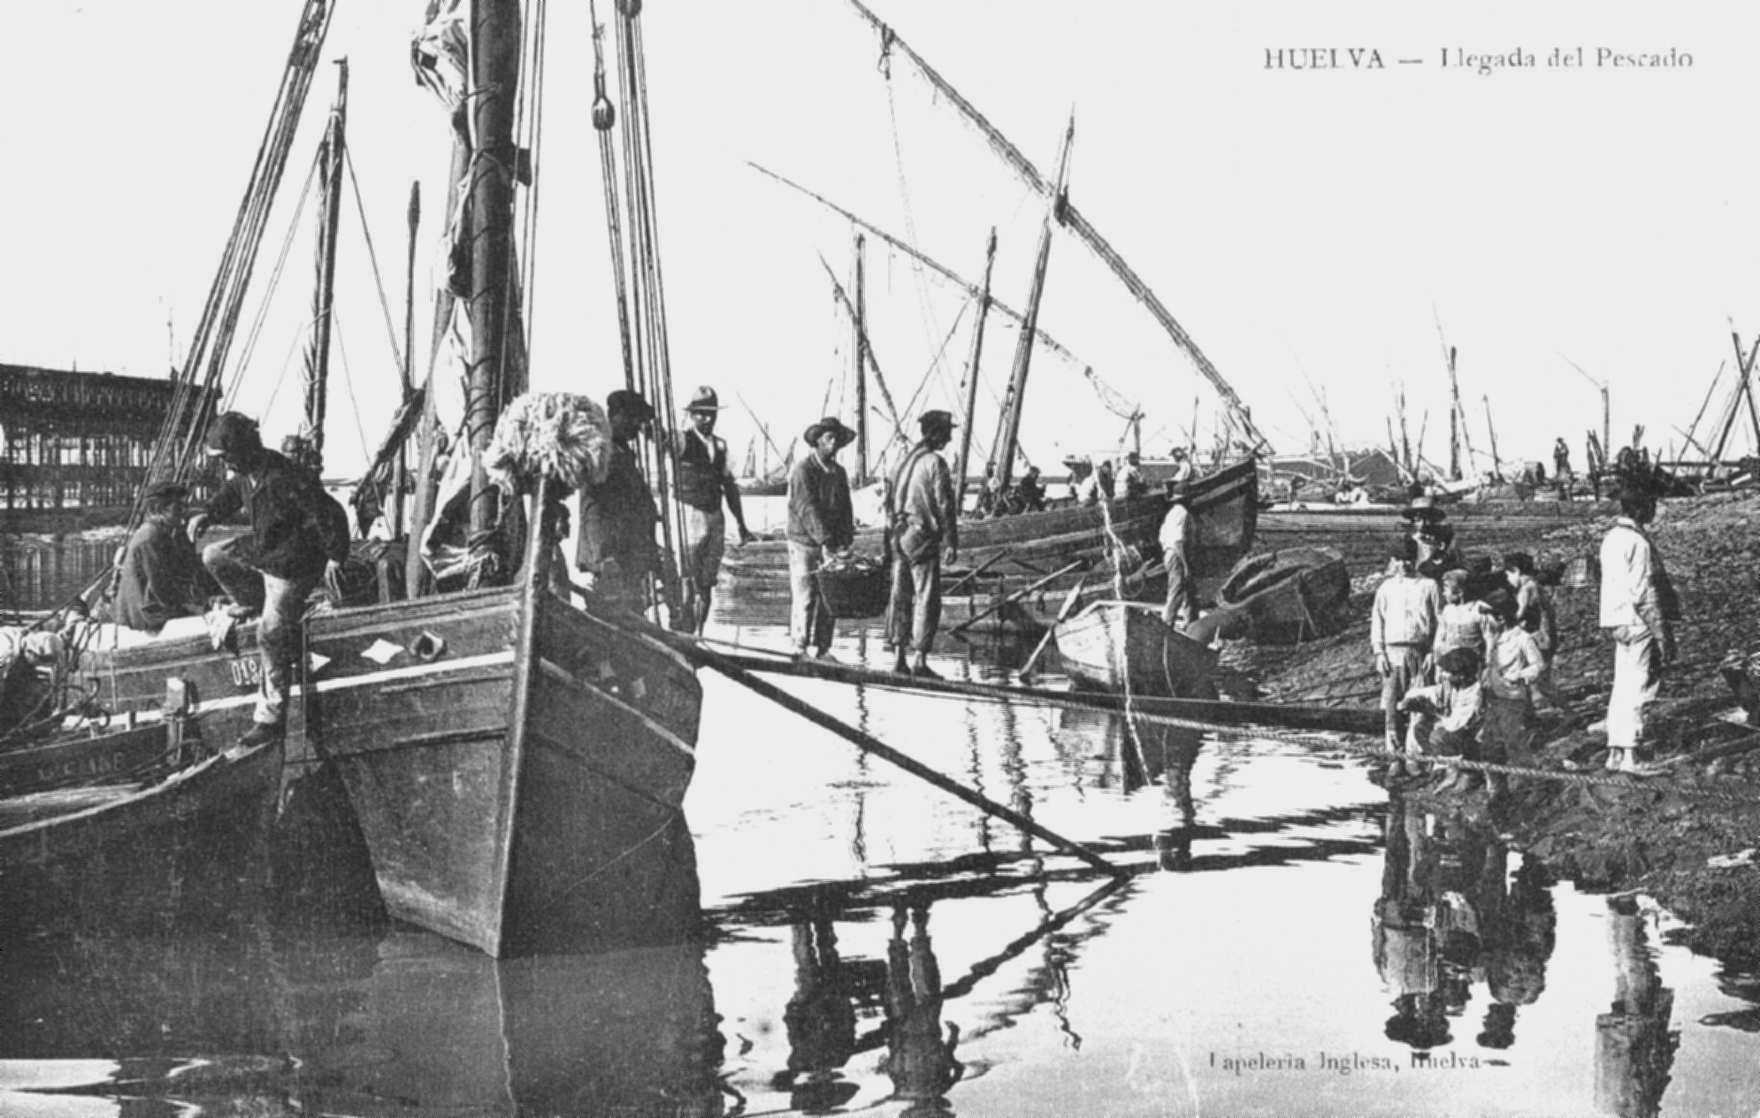 Puerto Huelva 1911